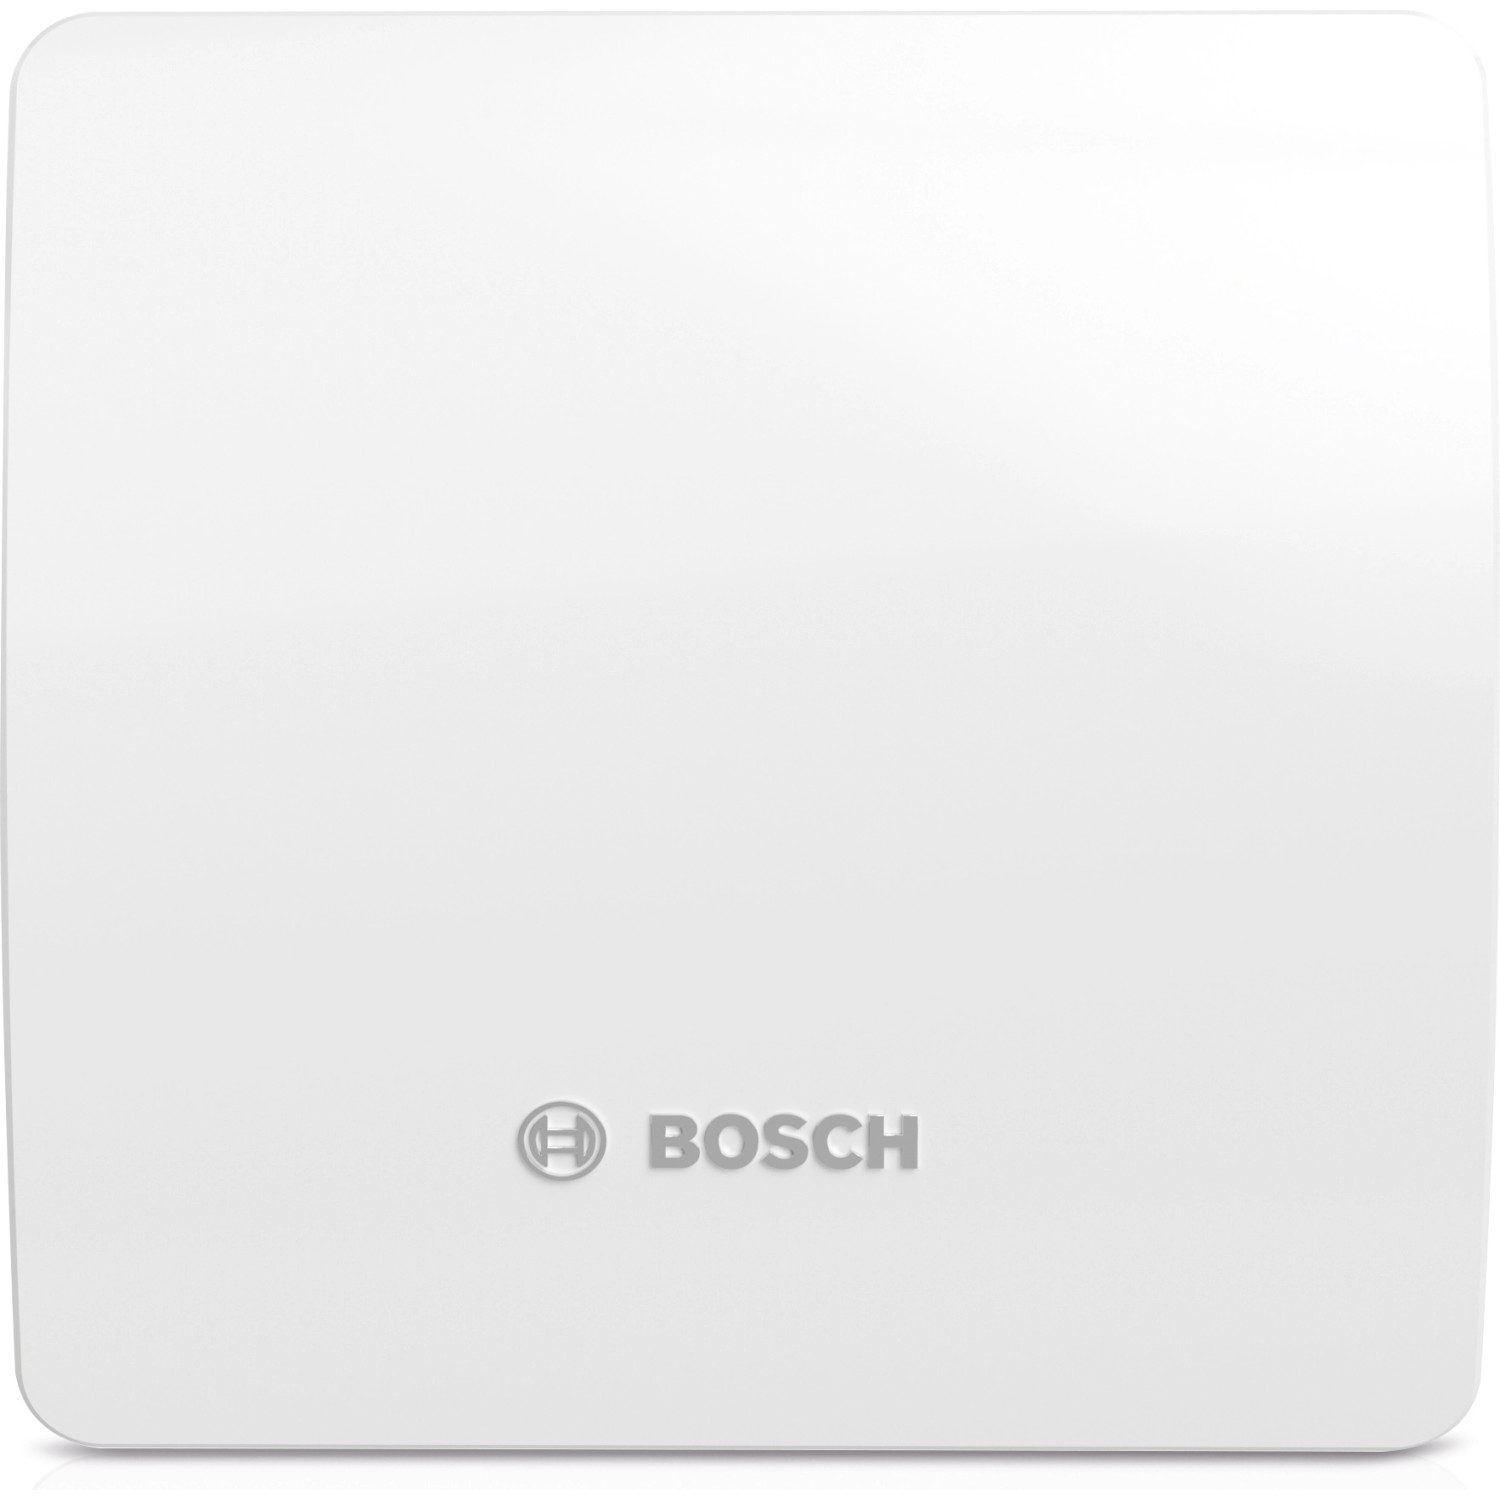 Bosch Badventilator Fan 1500 DH W 100 mit Luftfeuchtesensor Weiß-Glänzend